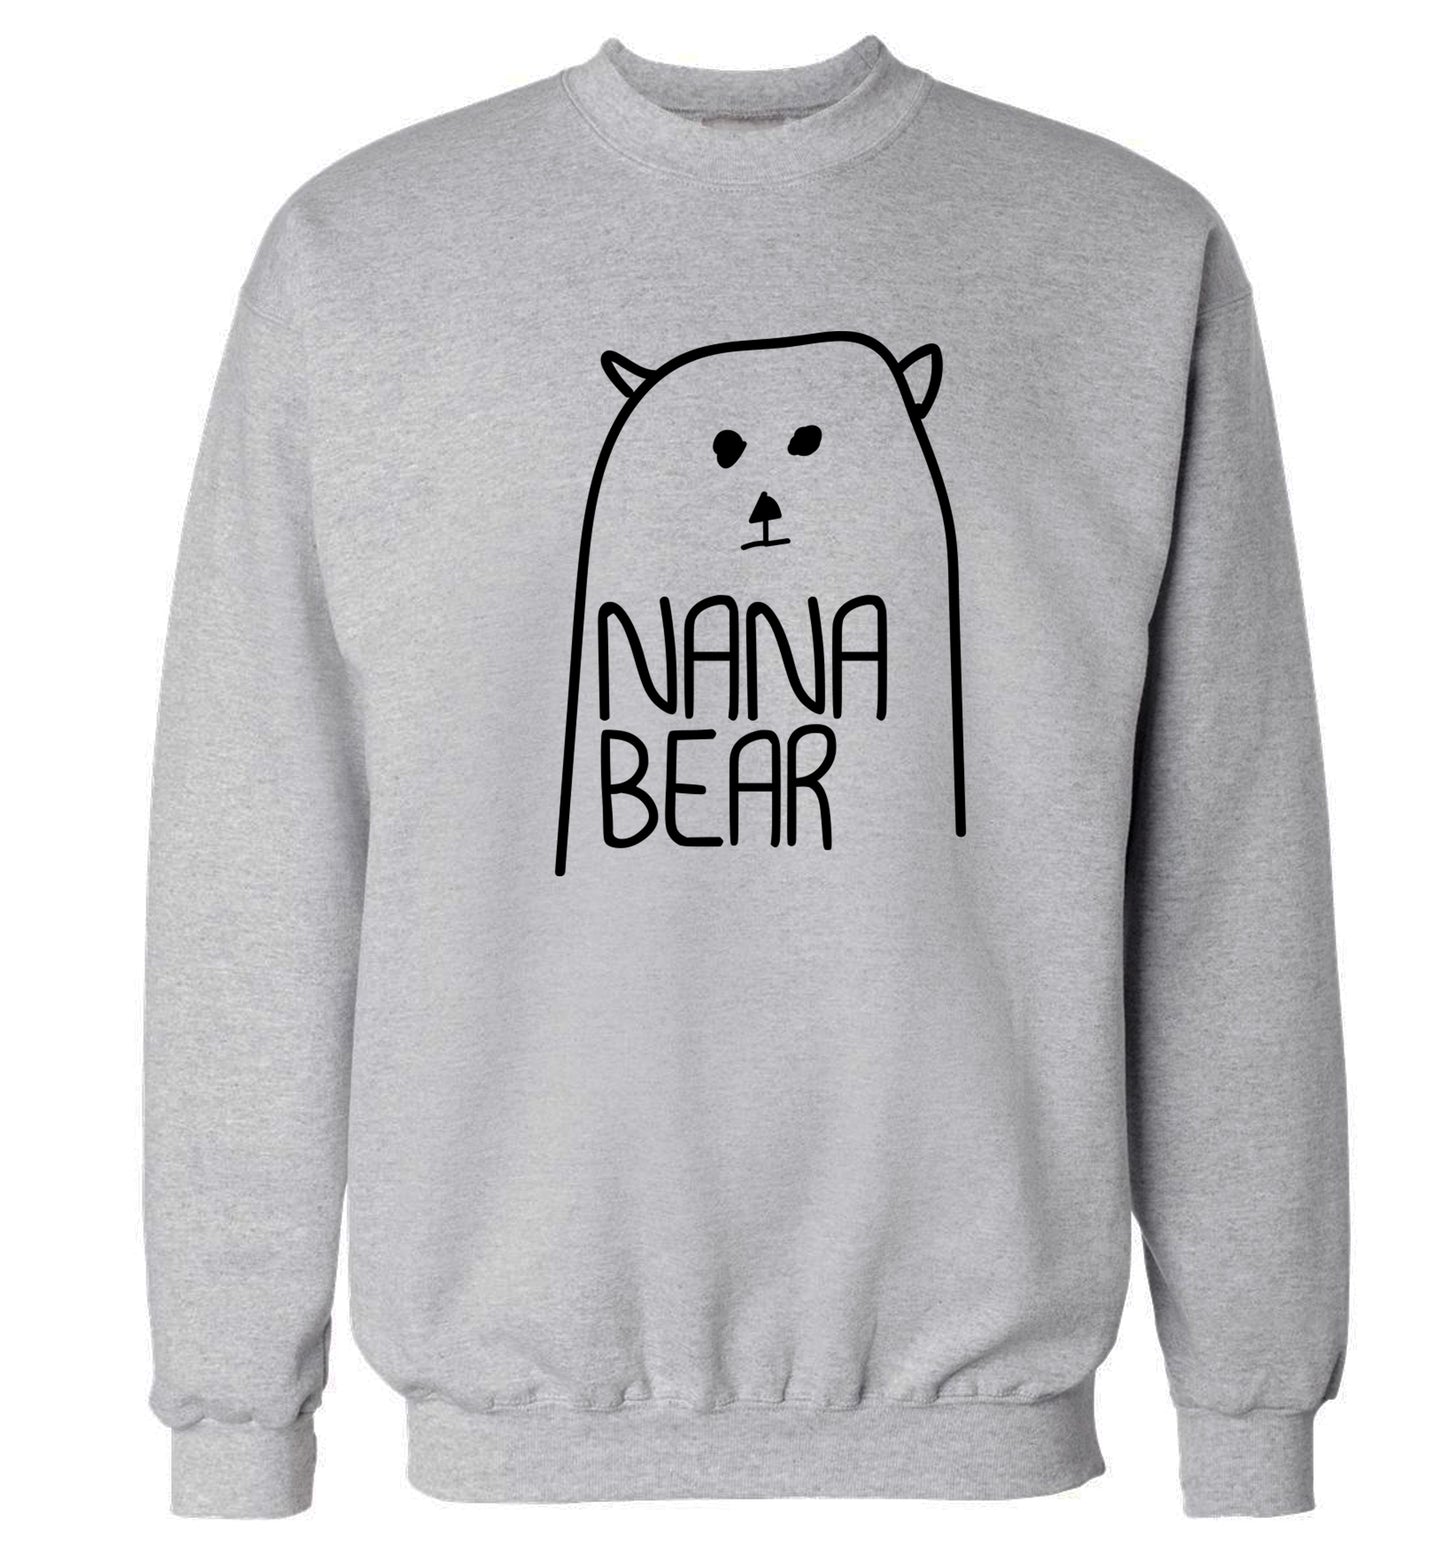 Nana bear Adult's unisex grey Sweater 2XL